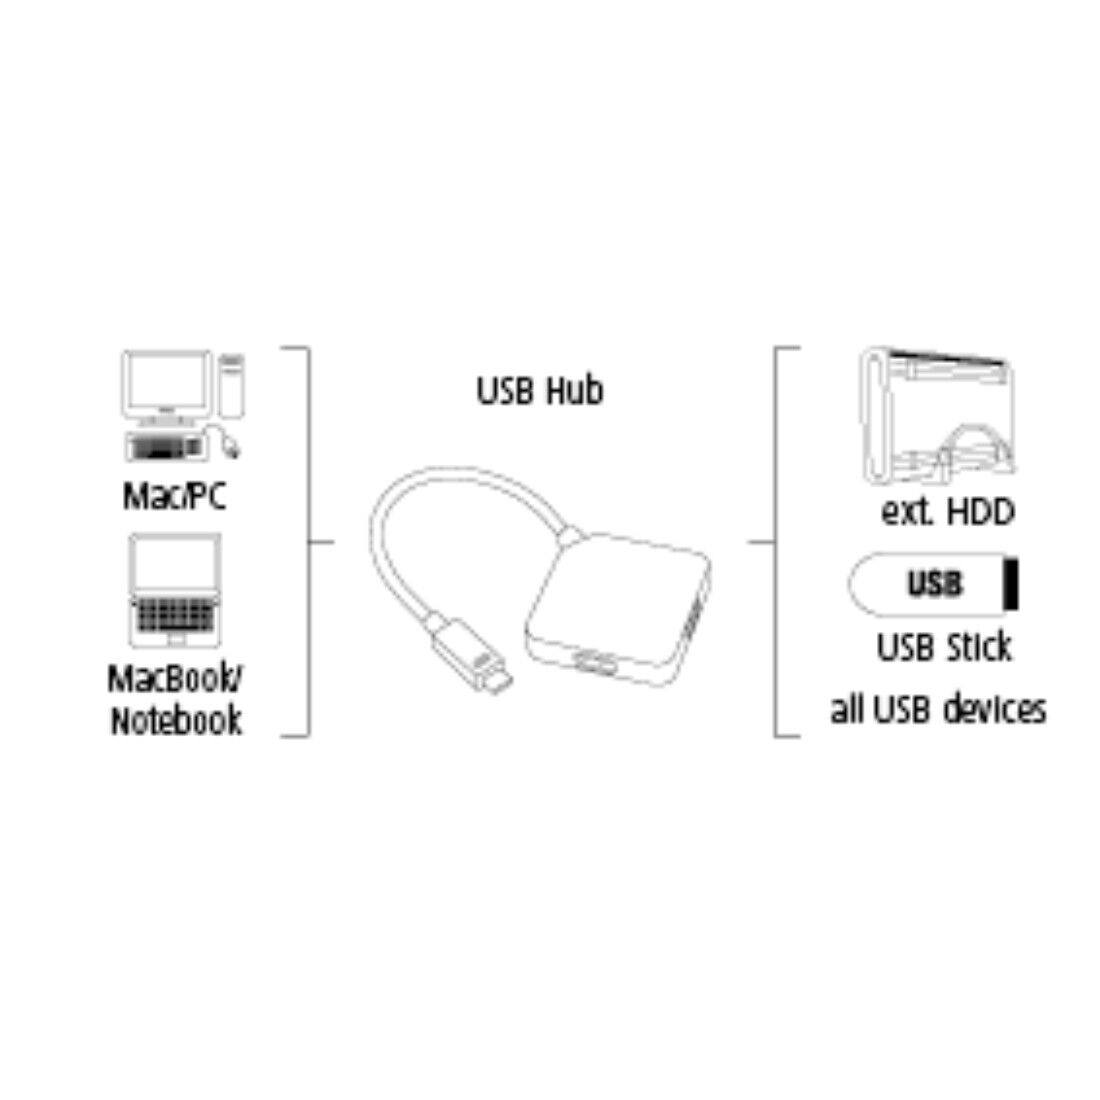 Hub Tip C 1:4 Hama, USB 3.1, bus powered